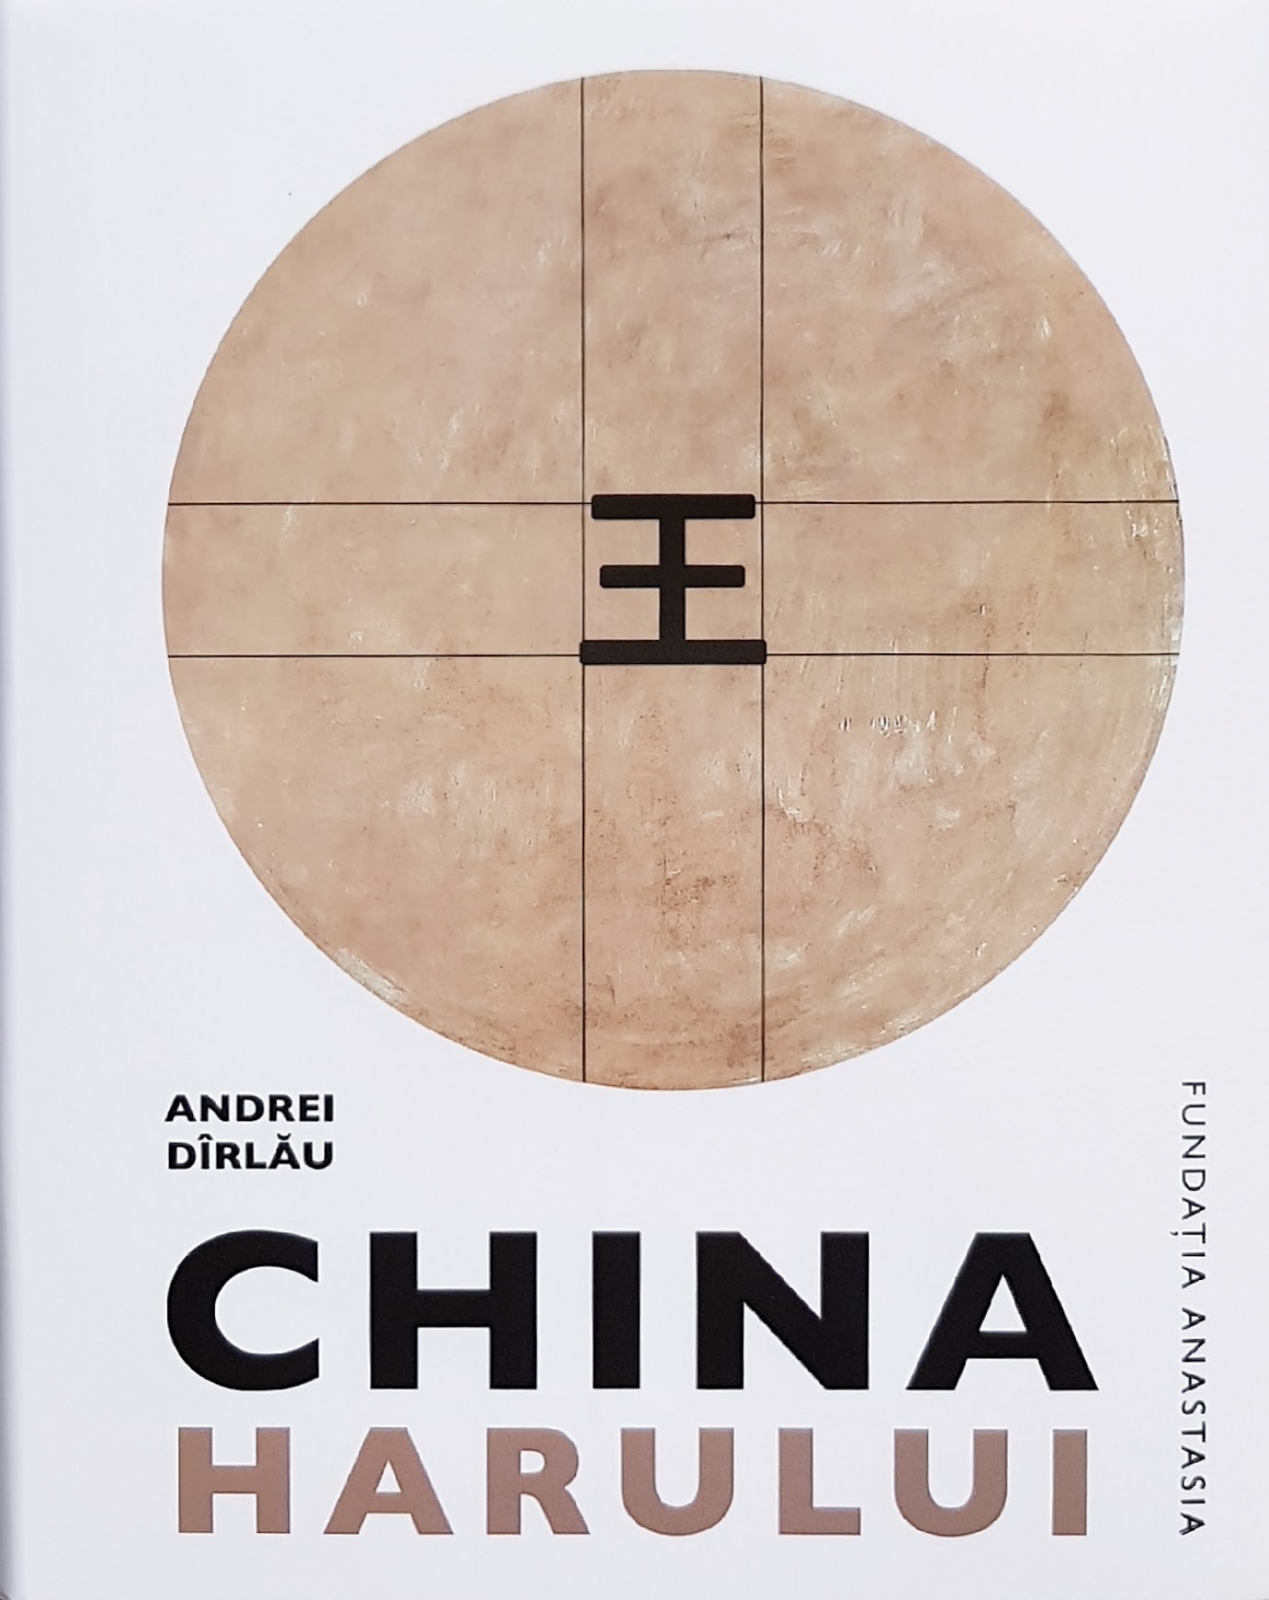 China harului | Andrei Dirlau